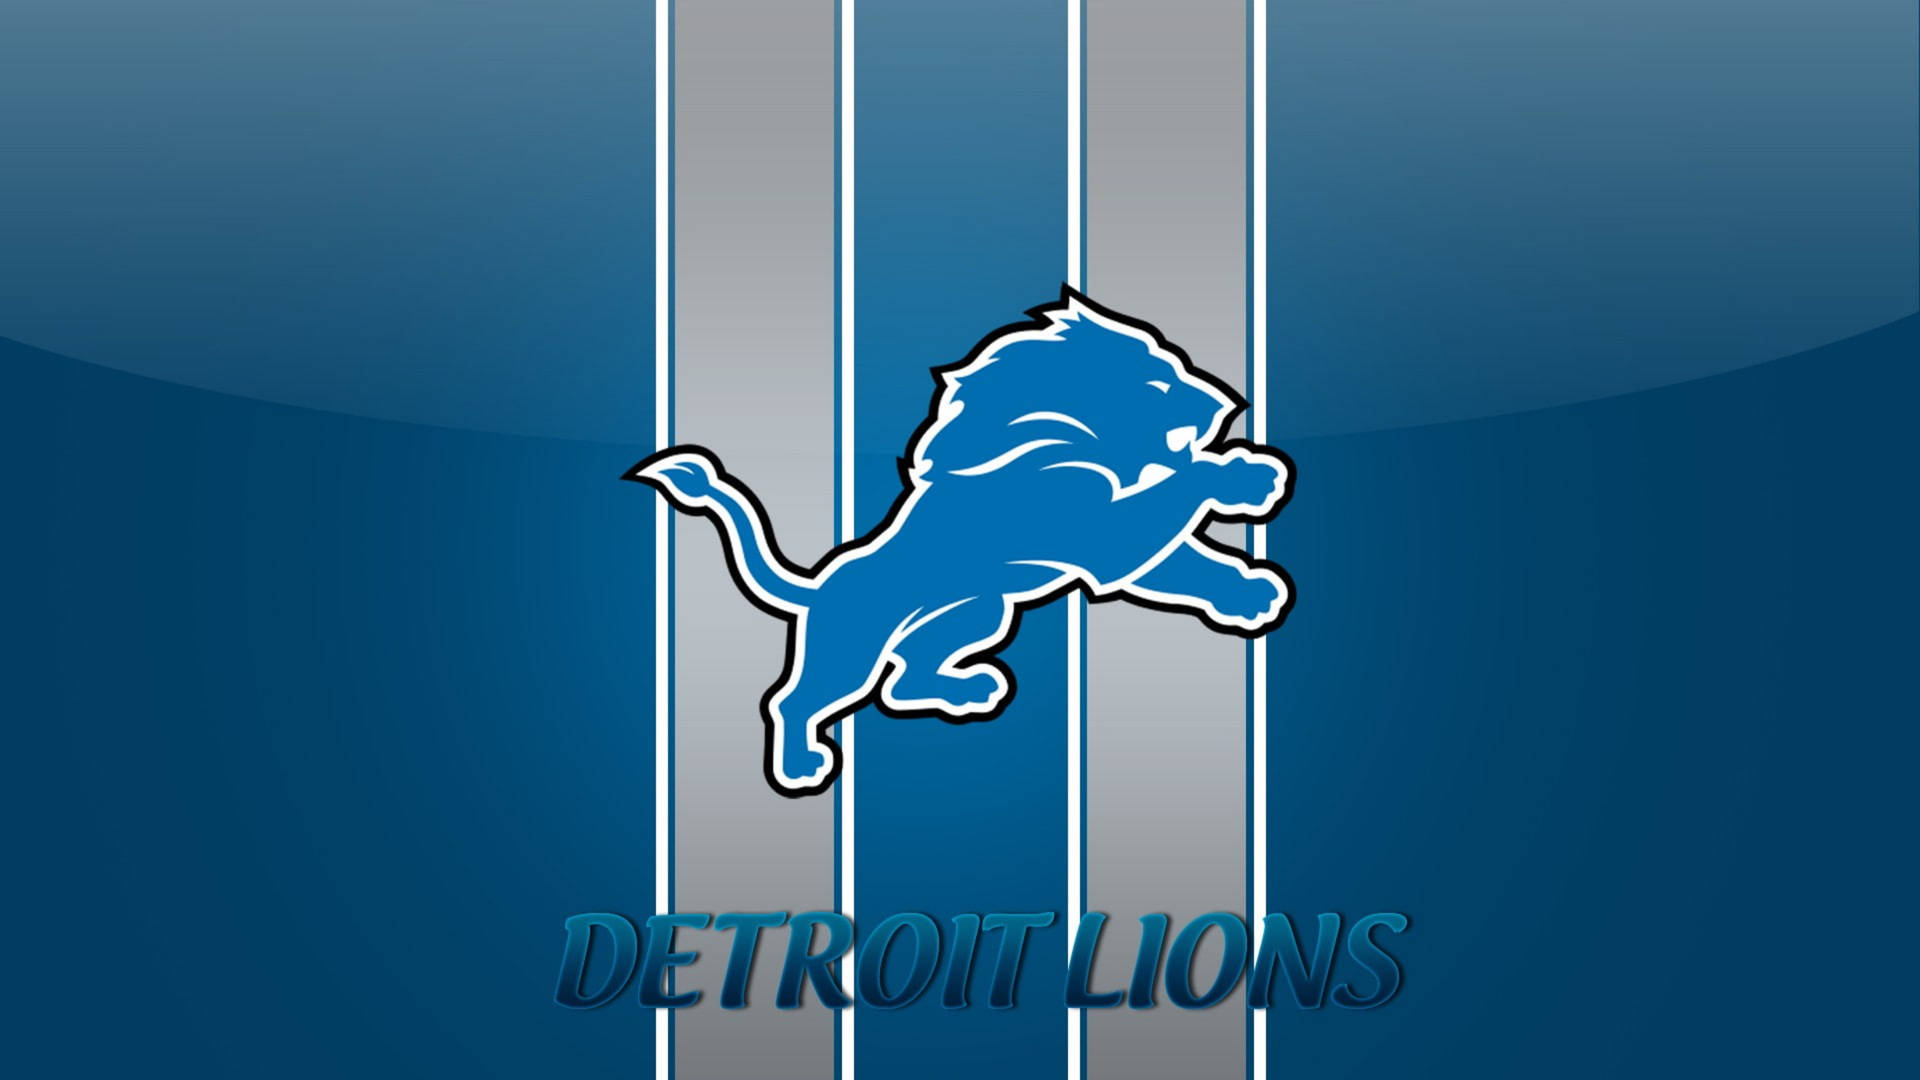 Detroit Lions Bianchi E Blu Sfondo